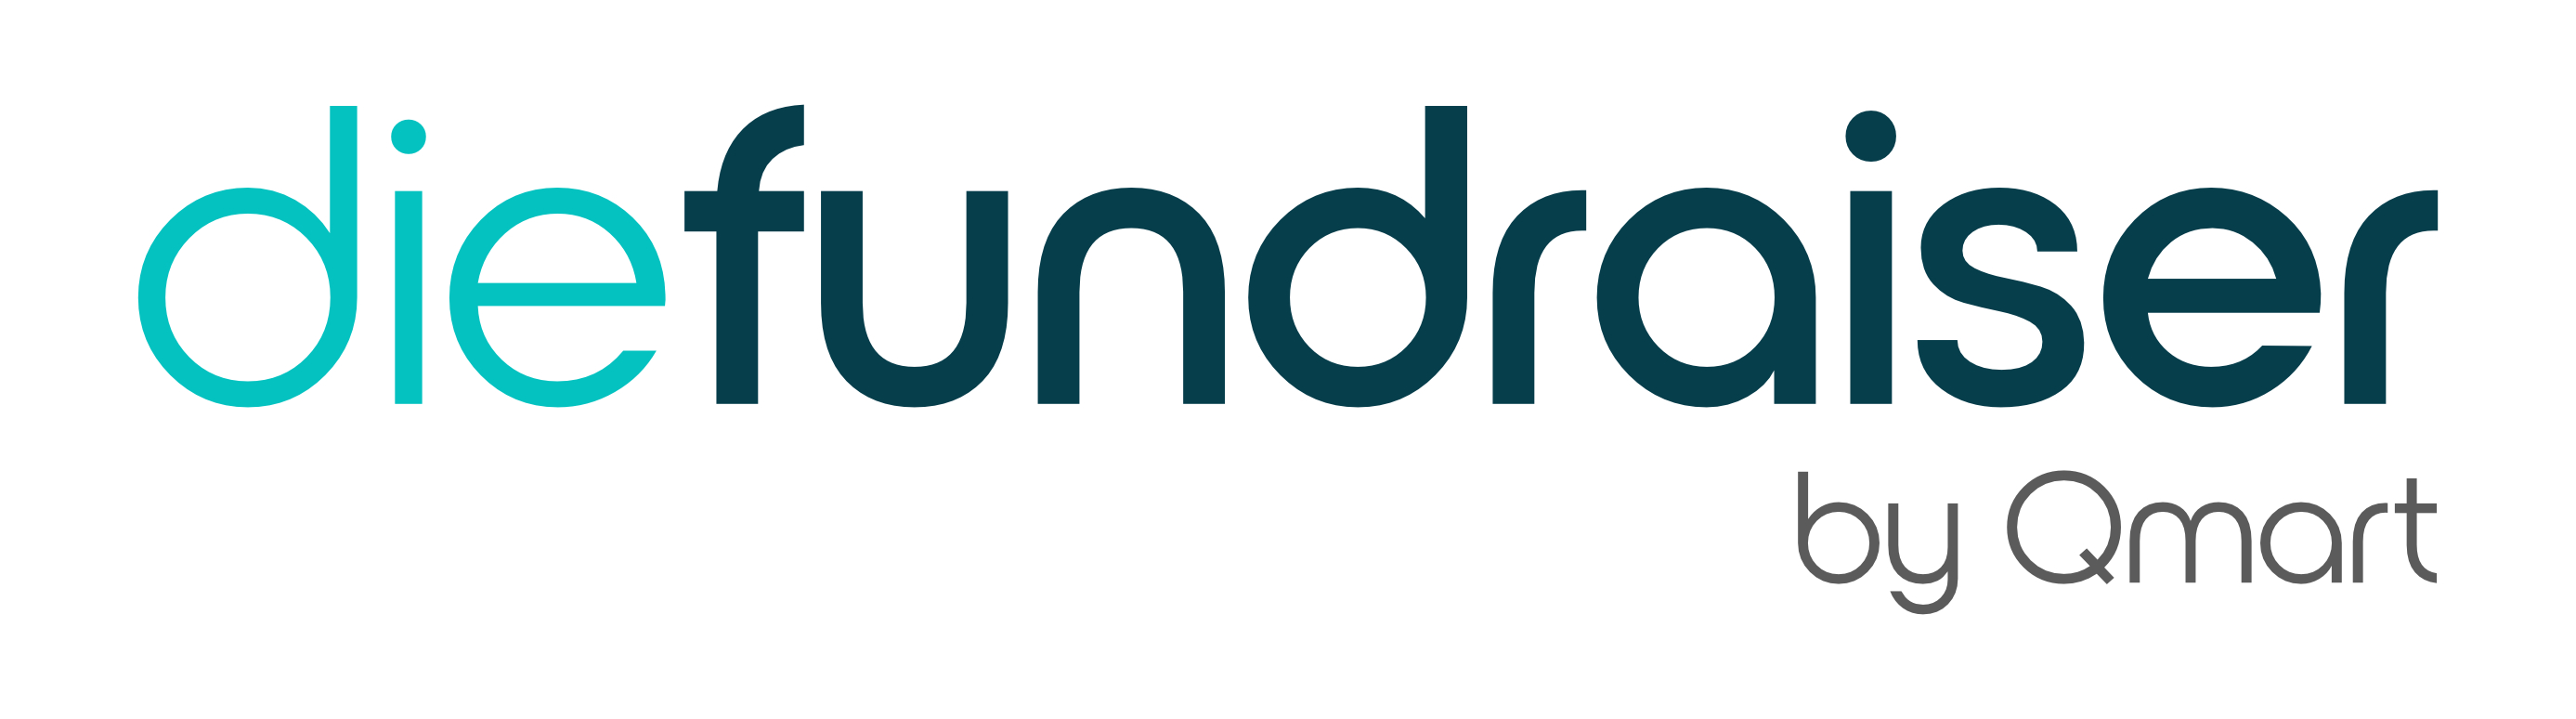 FundraisingBox-Partner DIE FUNDRAISER by Qmart Logo